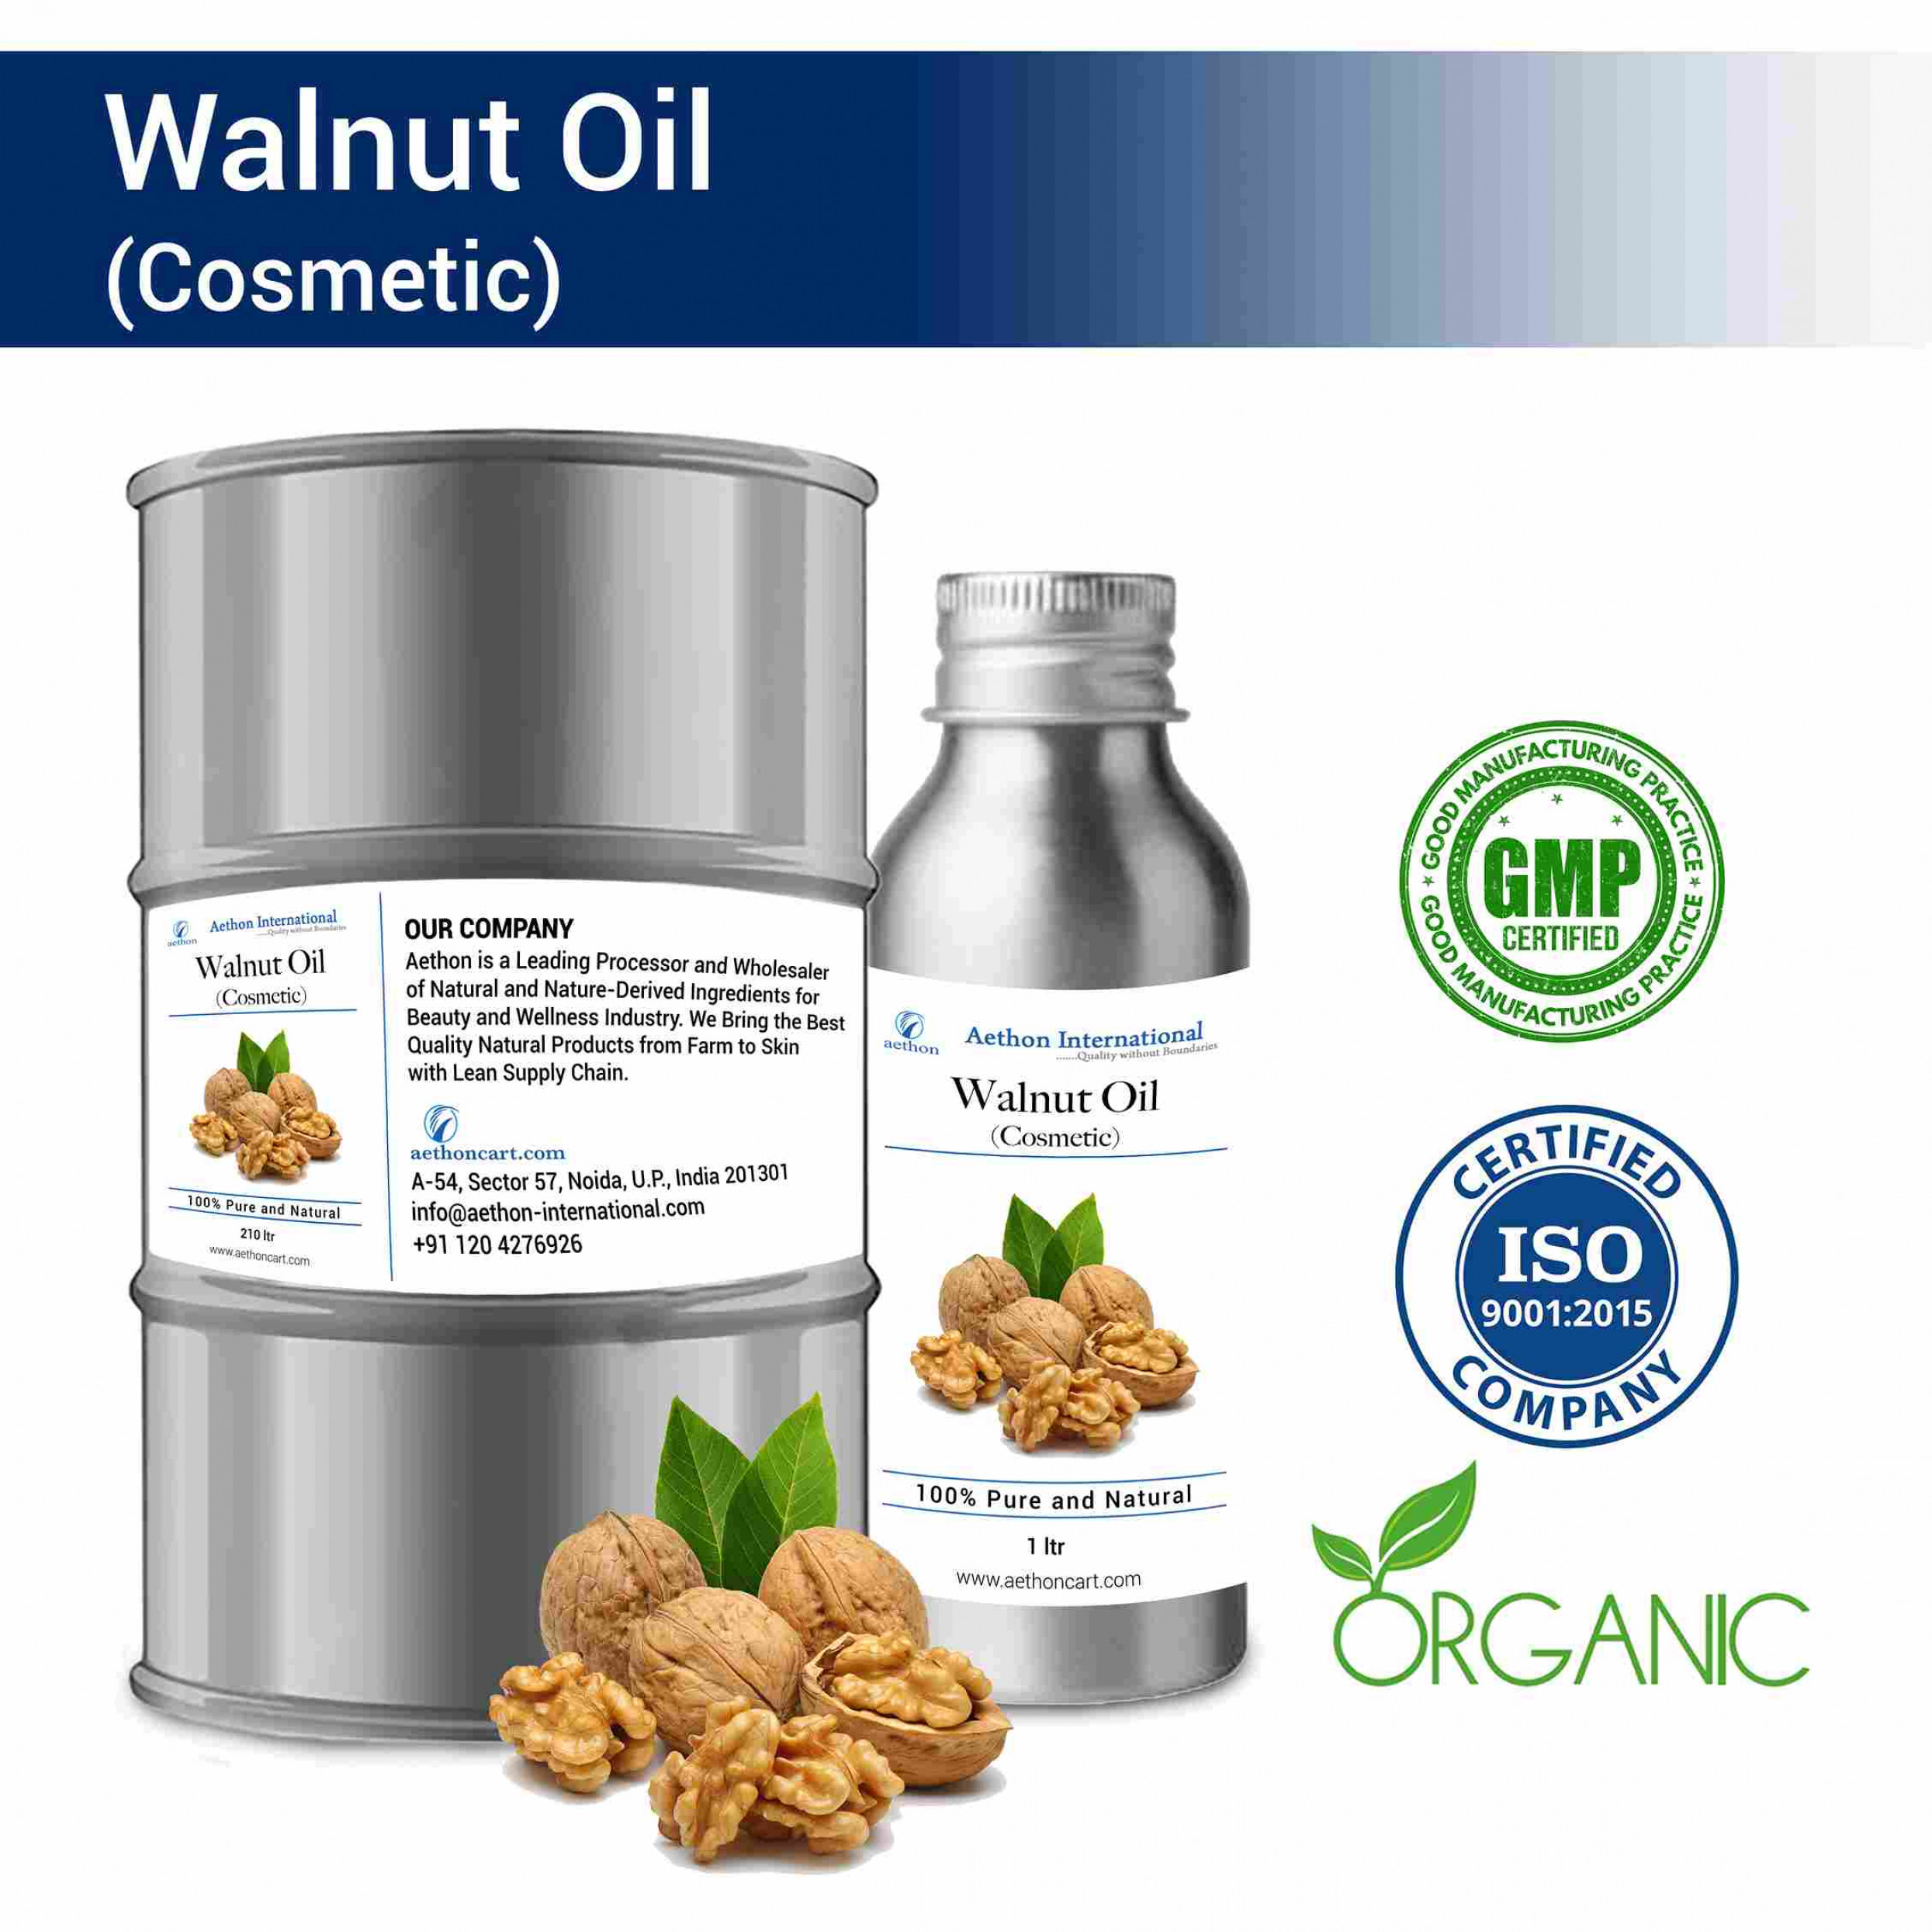 Walnut Oil (Cosmetic)